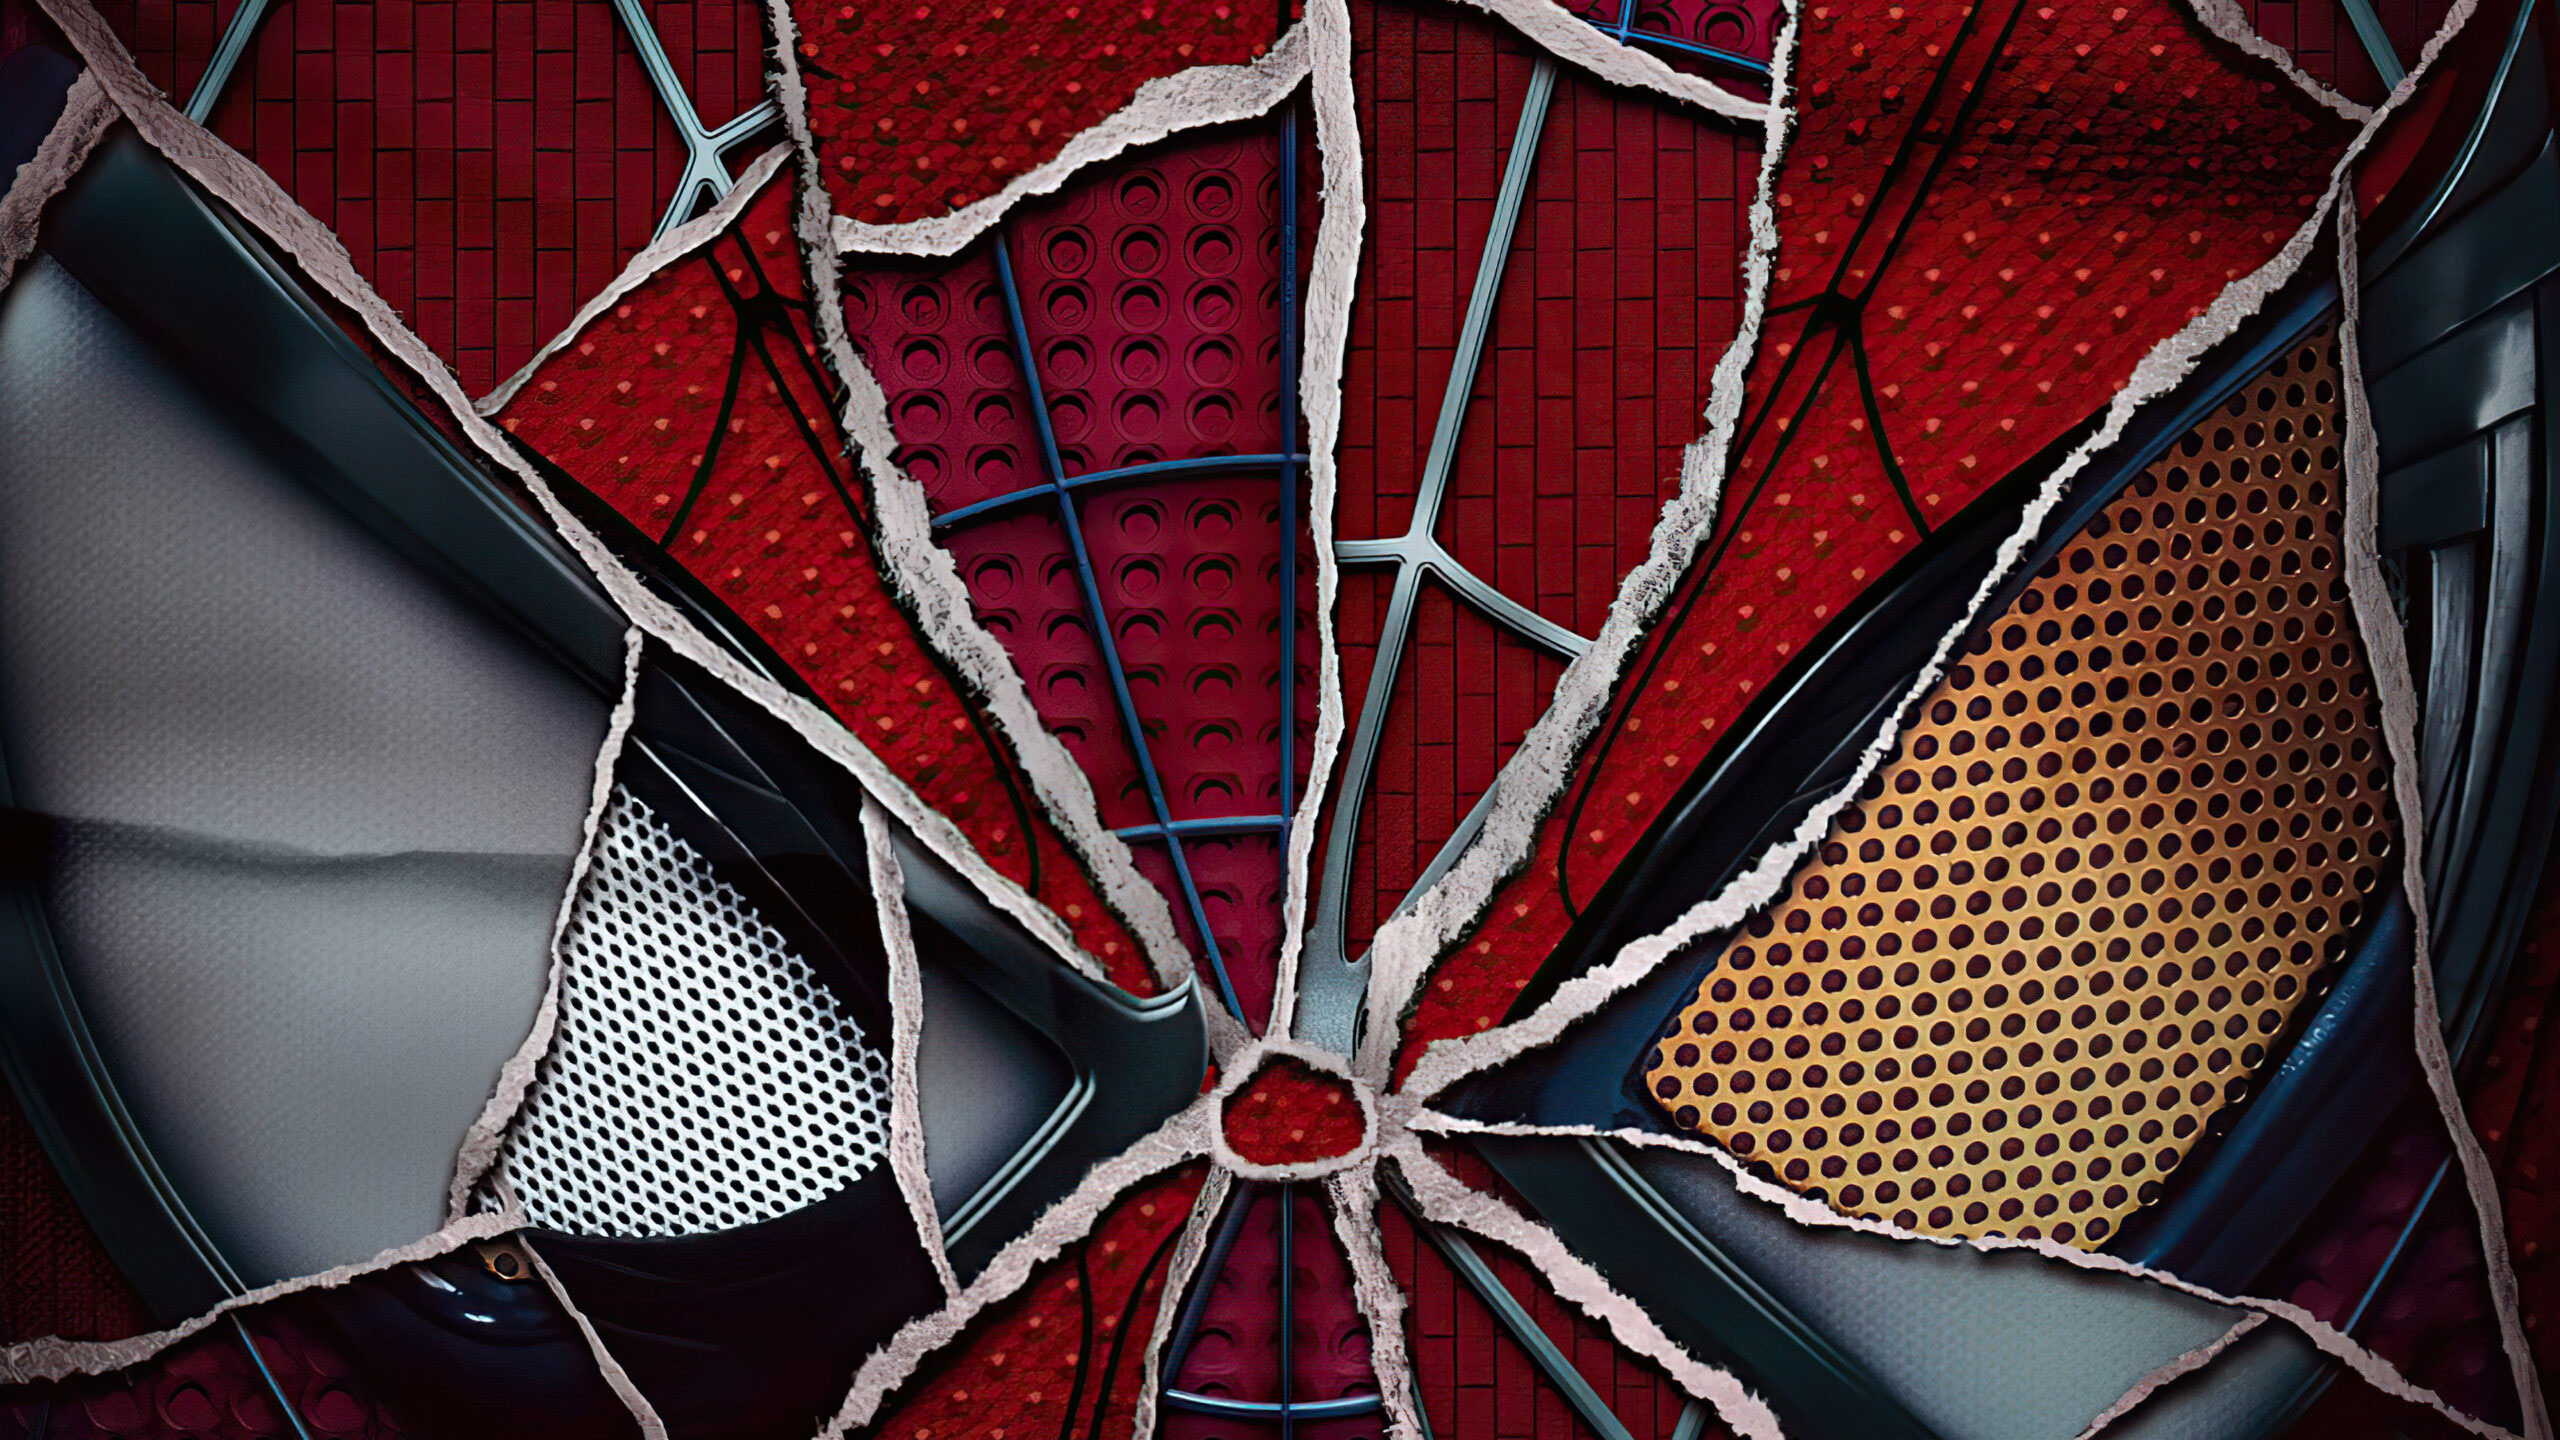 Hd Spiderman No Way Home Laptop Wallpaper - Wallpaperforu